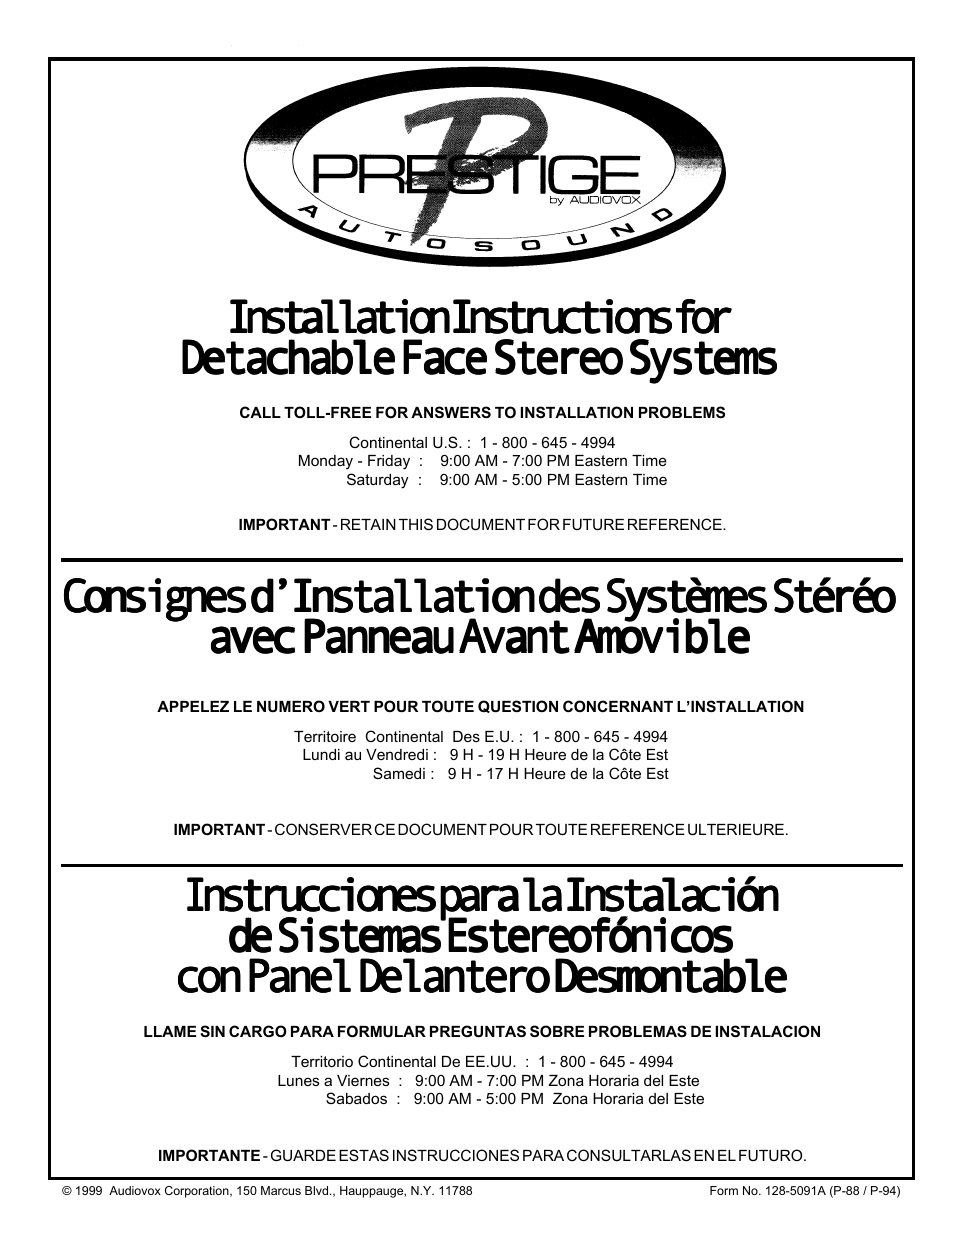 Prestige Detachable Face Stereo Systems